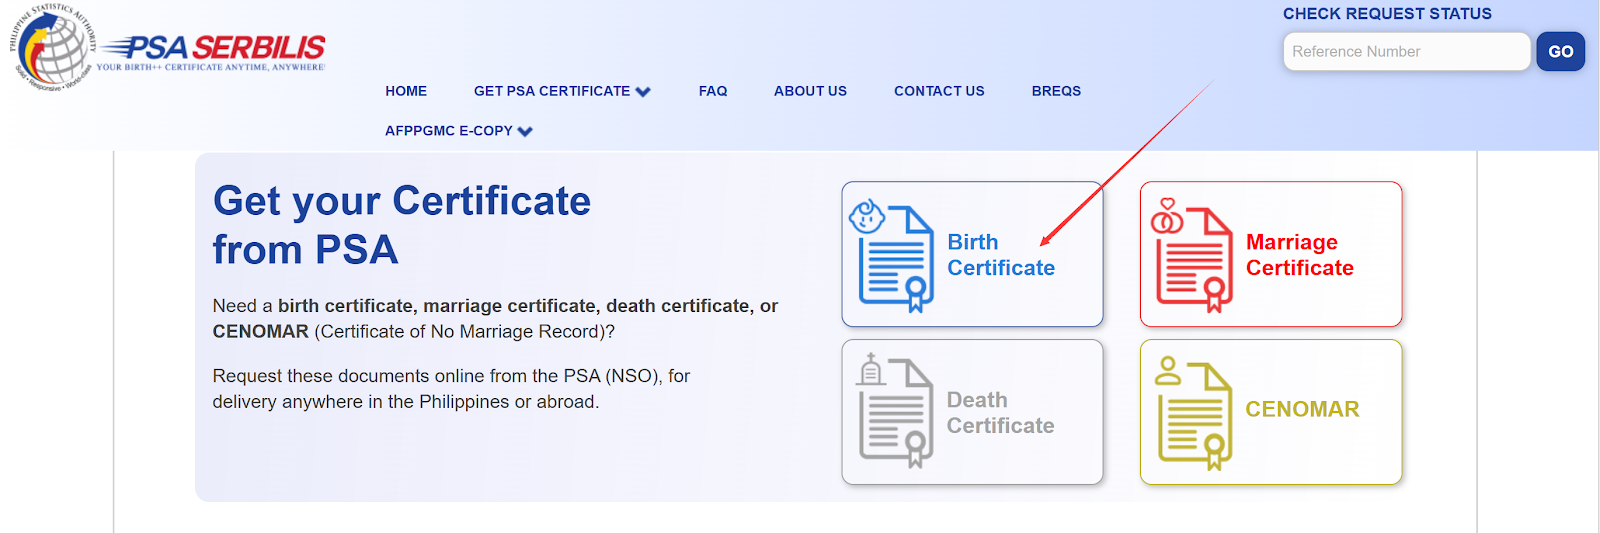 Click "Birth Certificate" on PSASerbilis website